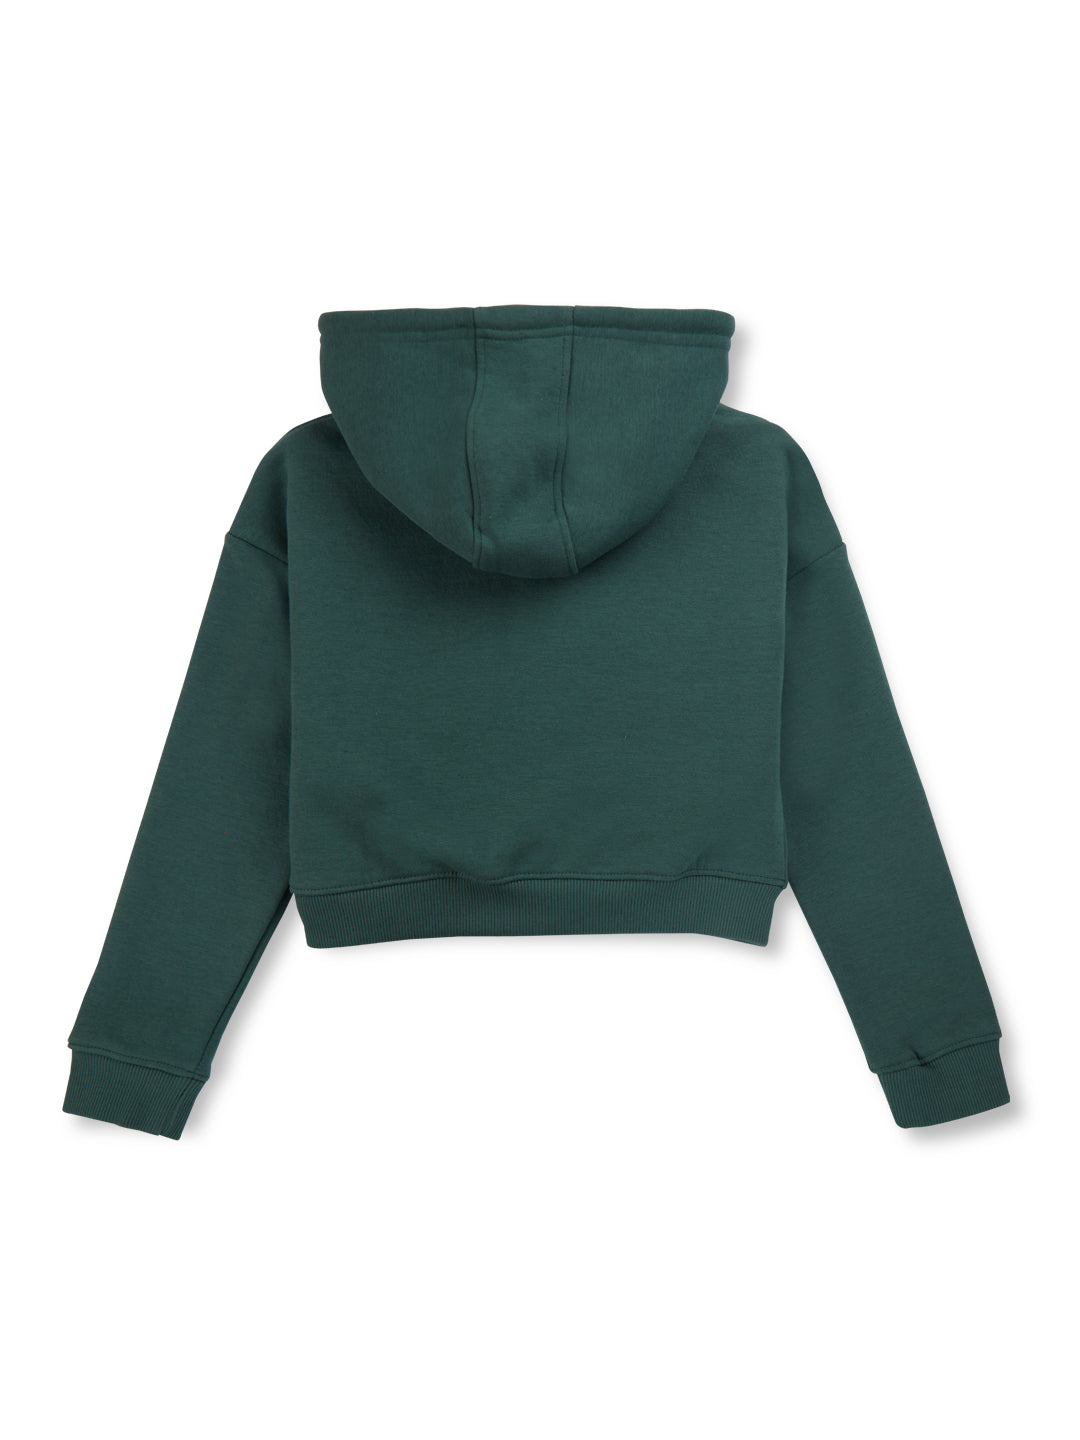 Girls Green Printed Fleece Full Sleeves Sweat Shirt